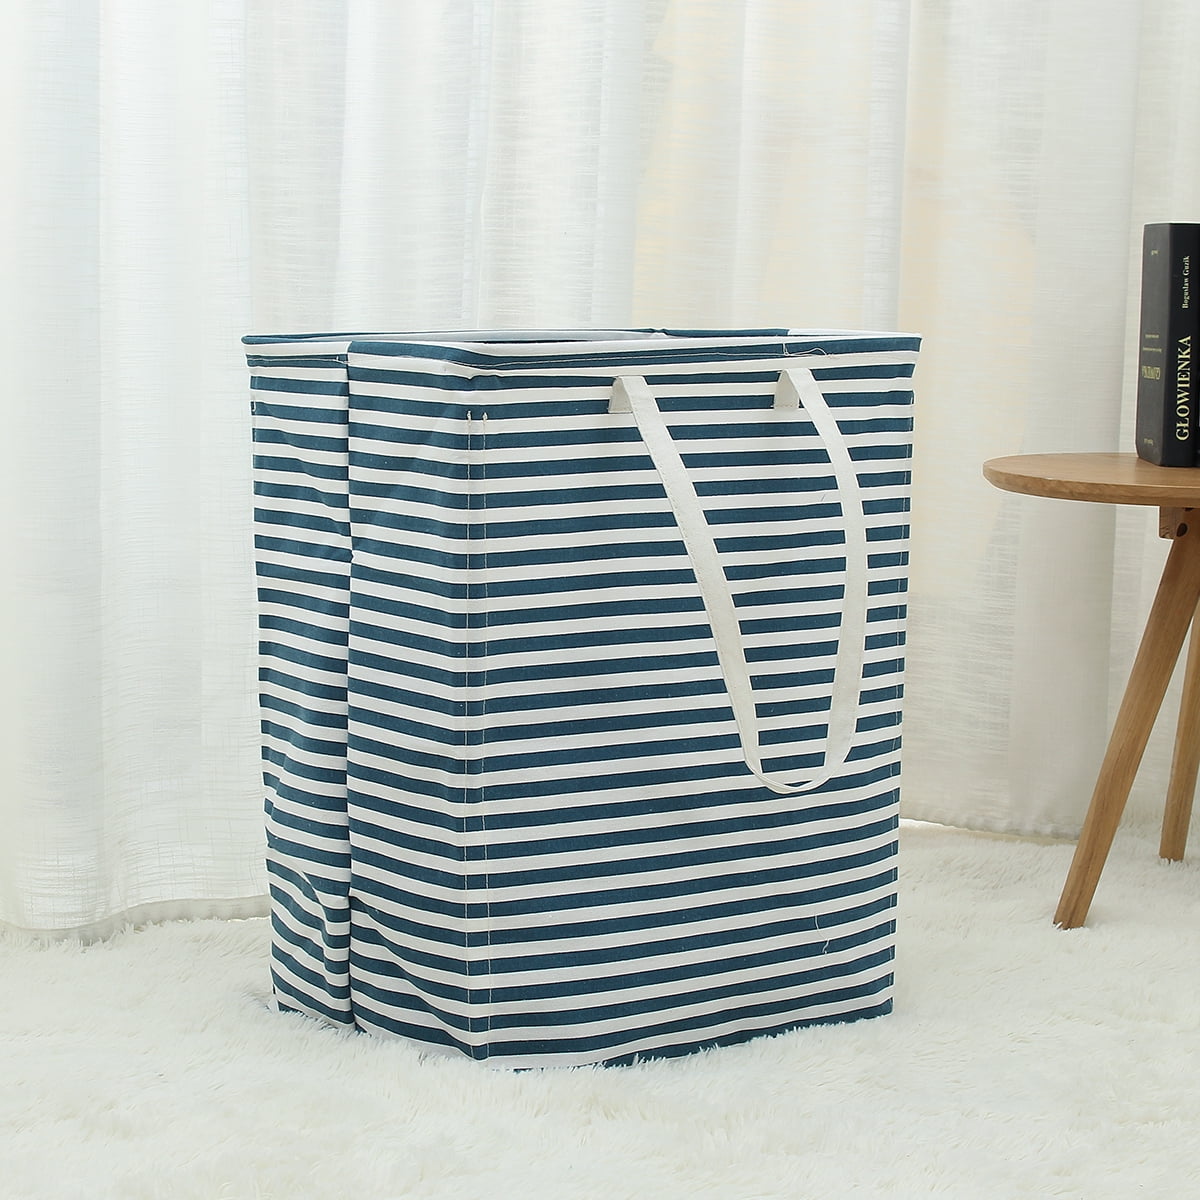 Foldable Dirty Clothes Storage Bag Laundry Basket  Hamper Washing Bin Household